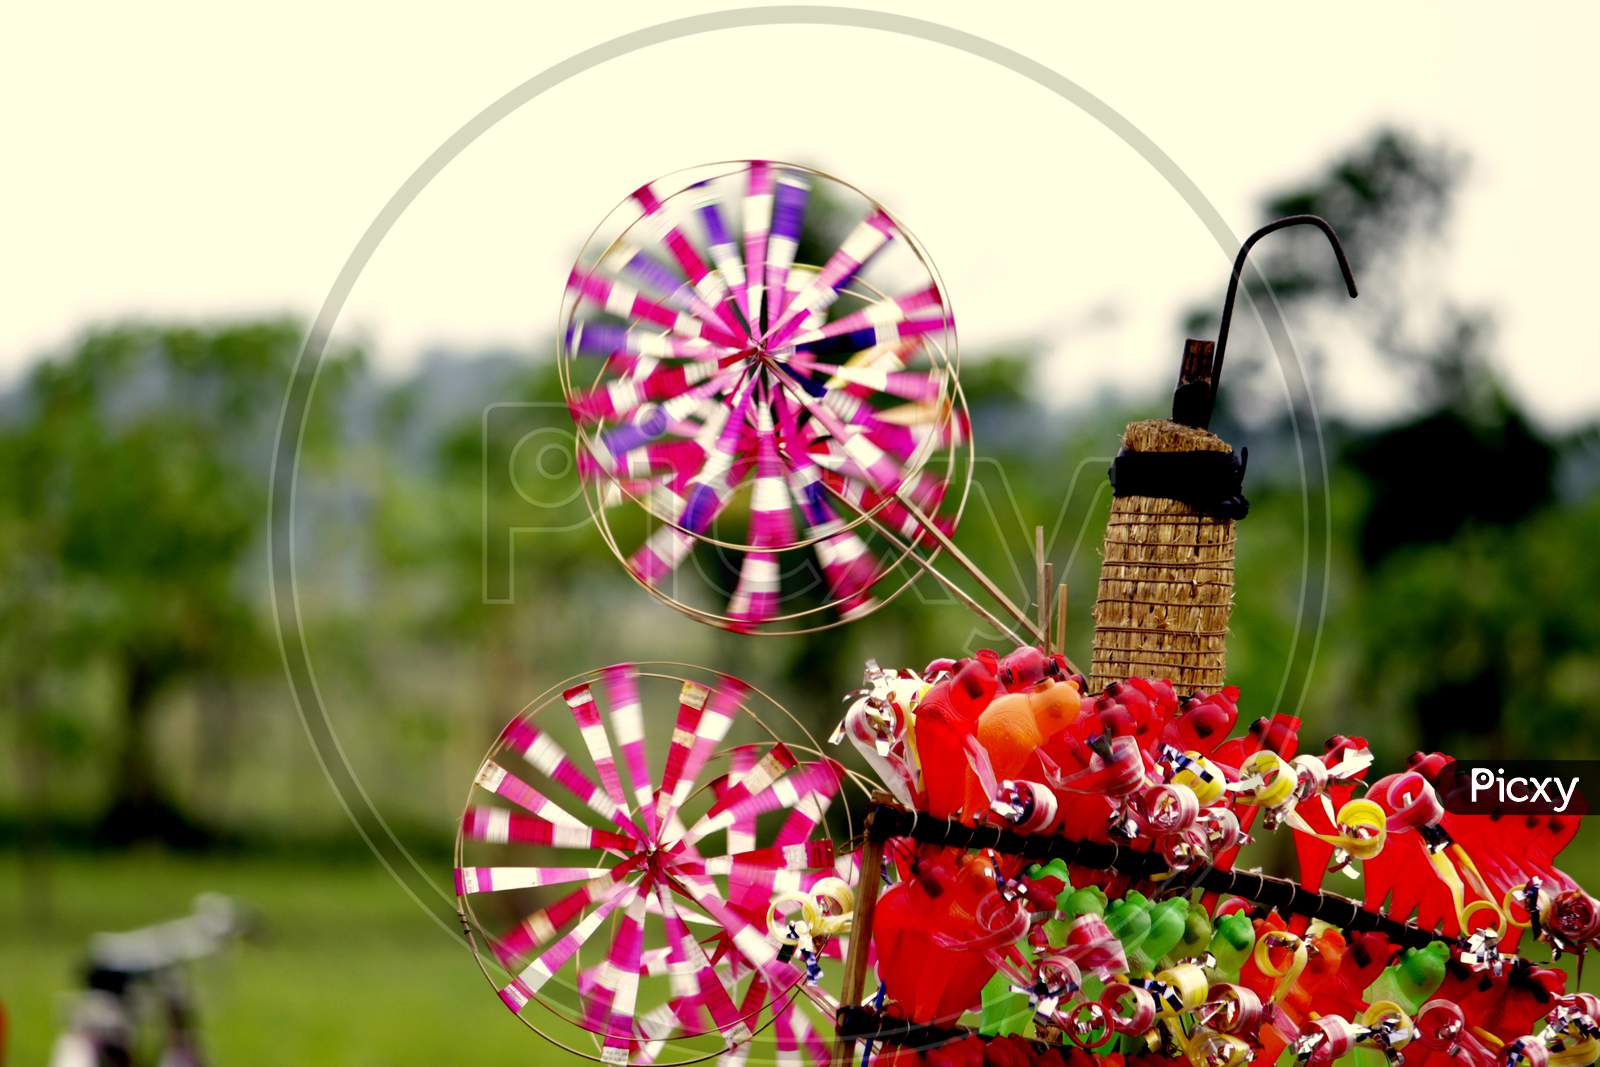 Colorful pin-wheel